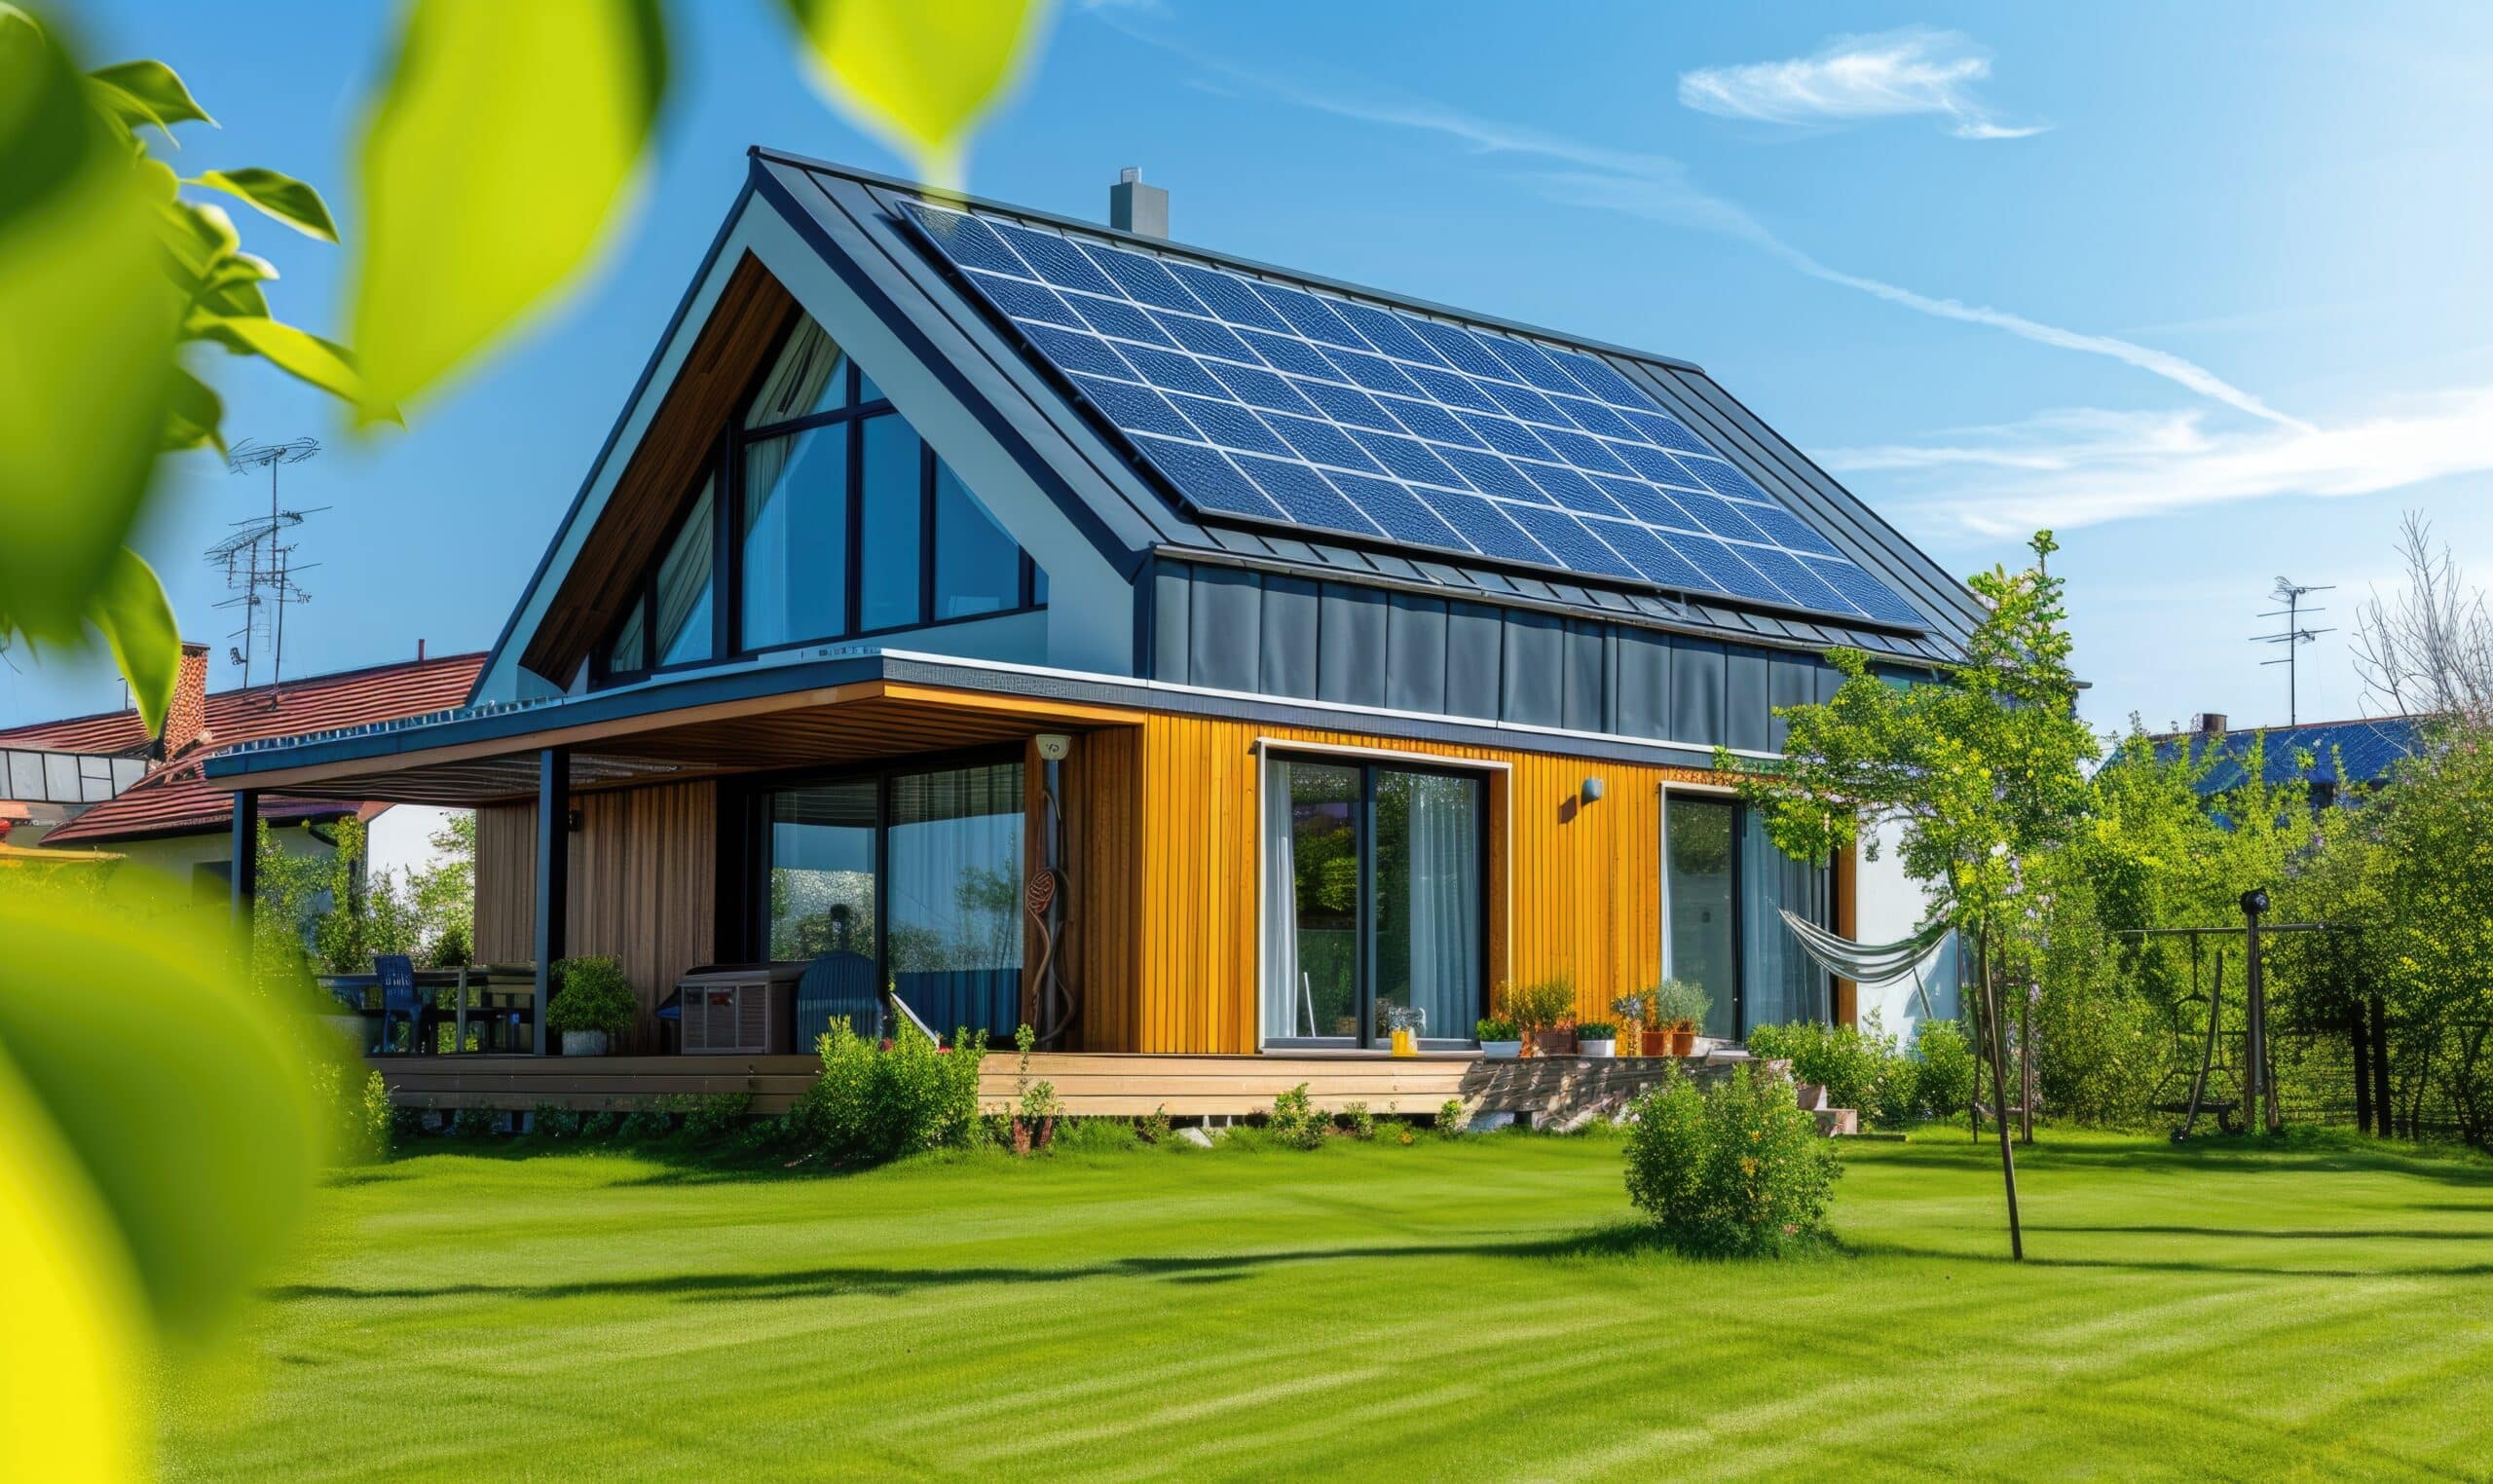 www.appr.com : Can solar generators supply home energy?